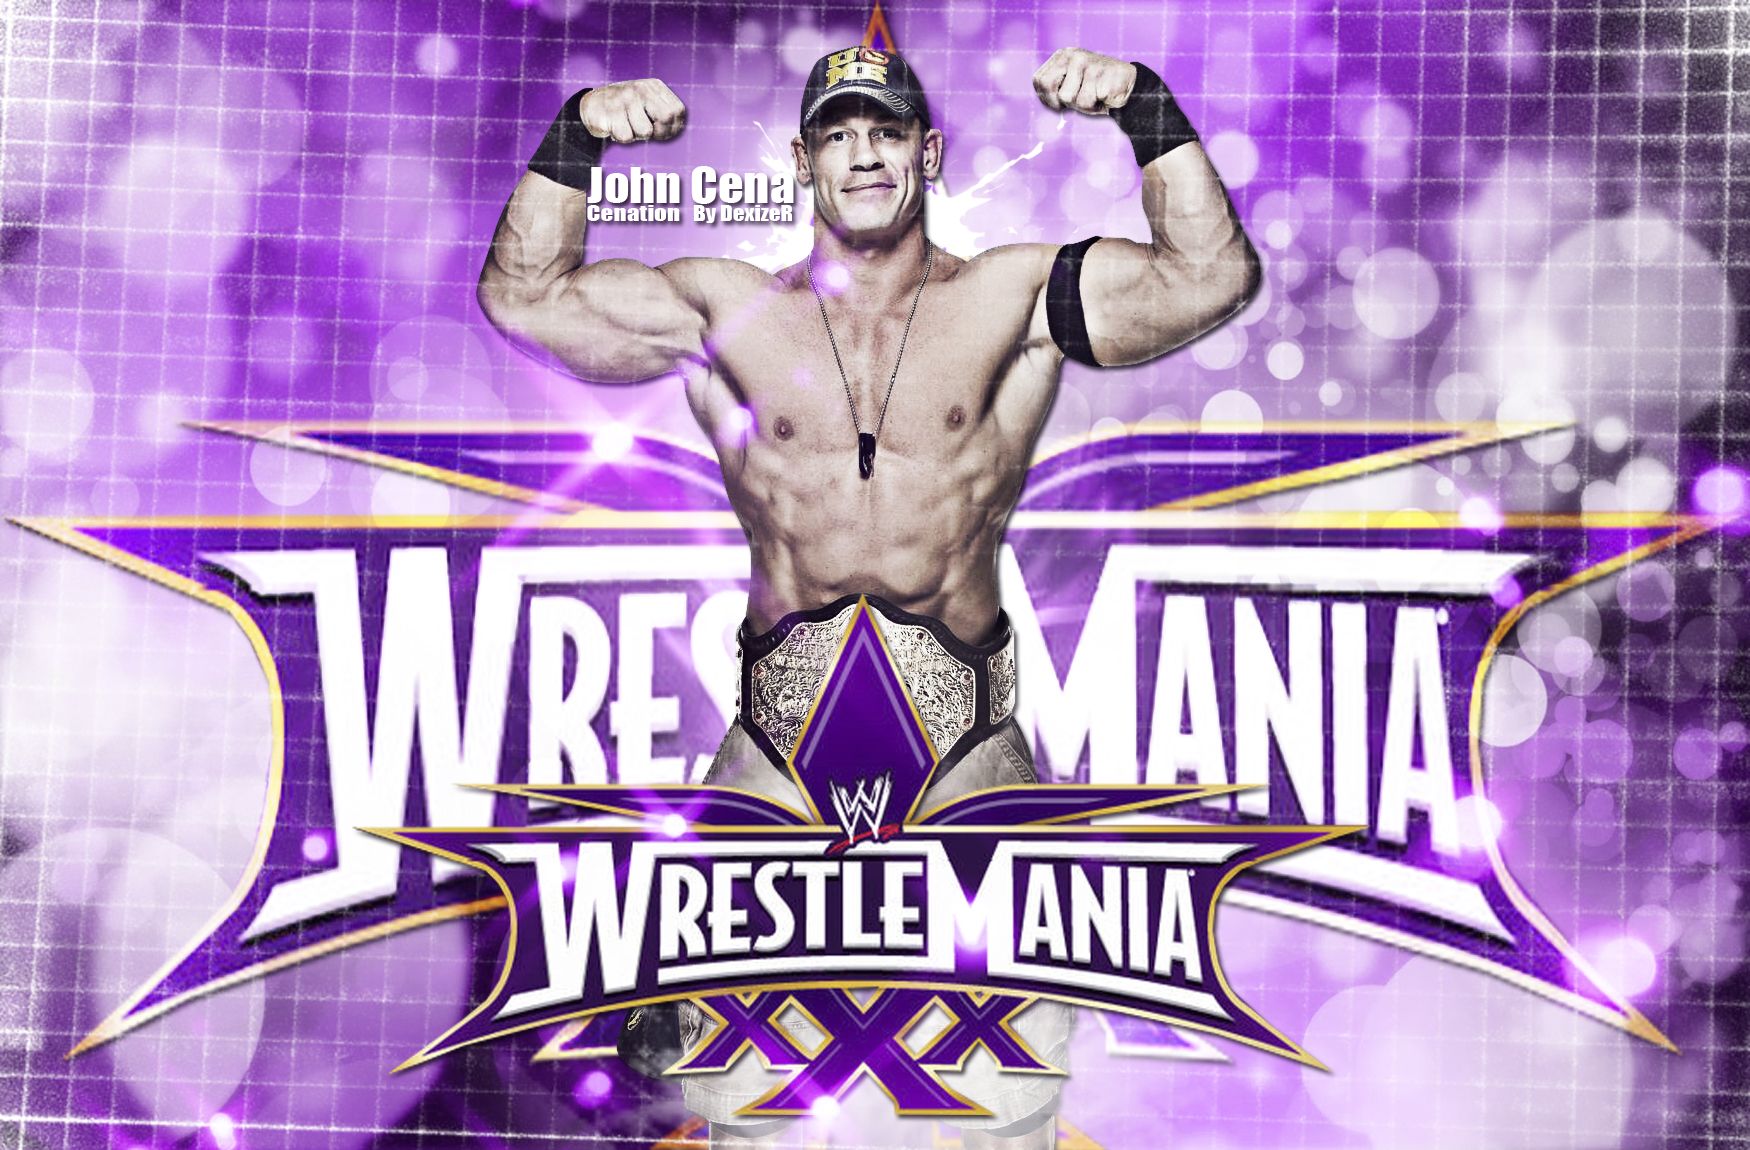 WWE John Cena Desktop Backgrounds 8401 - HD Wallpapers Site